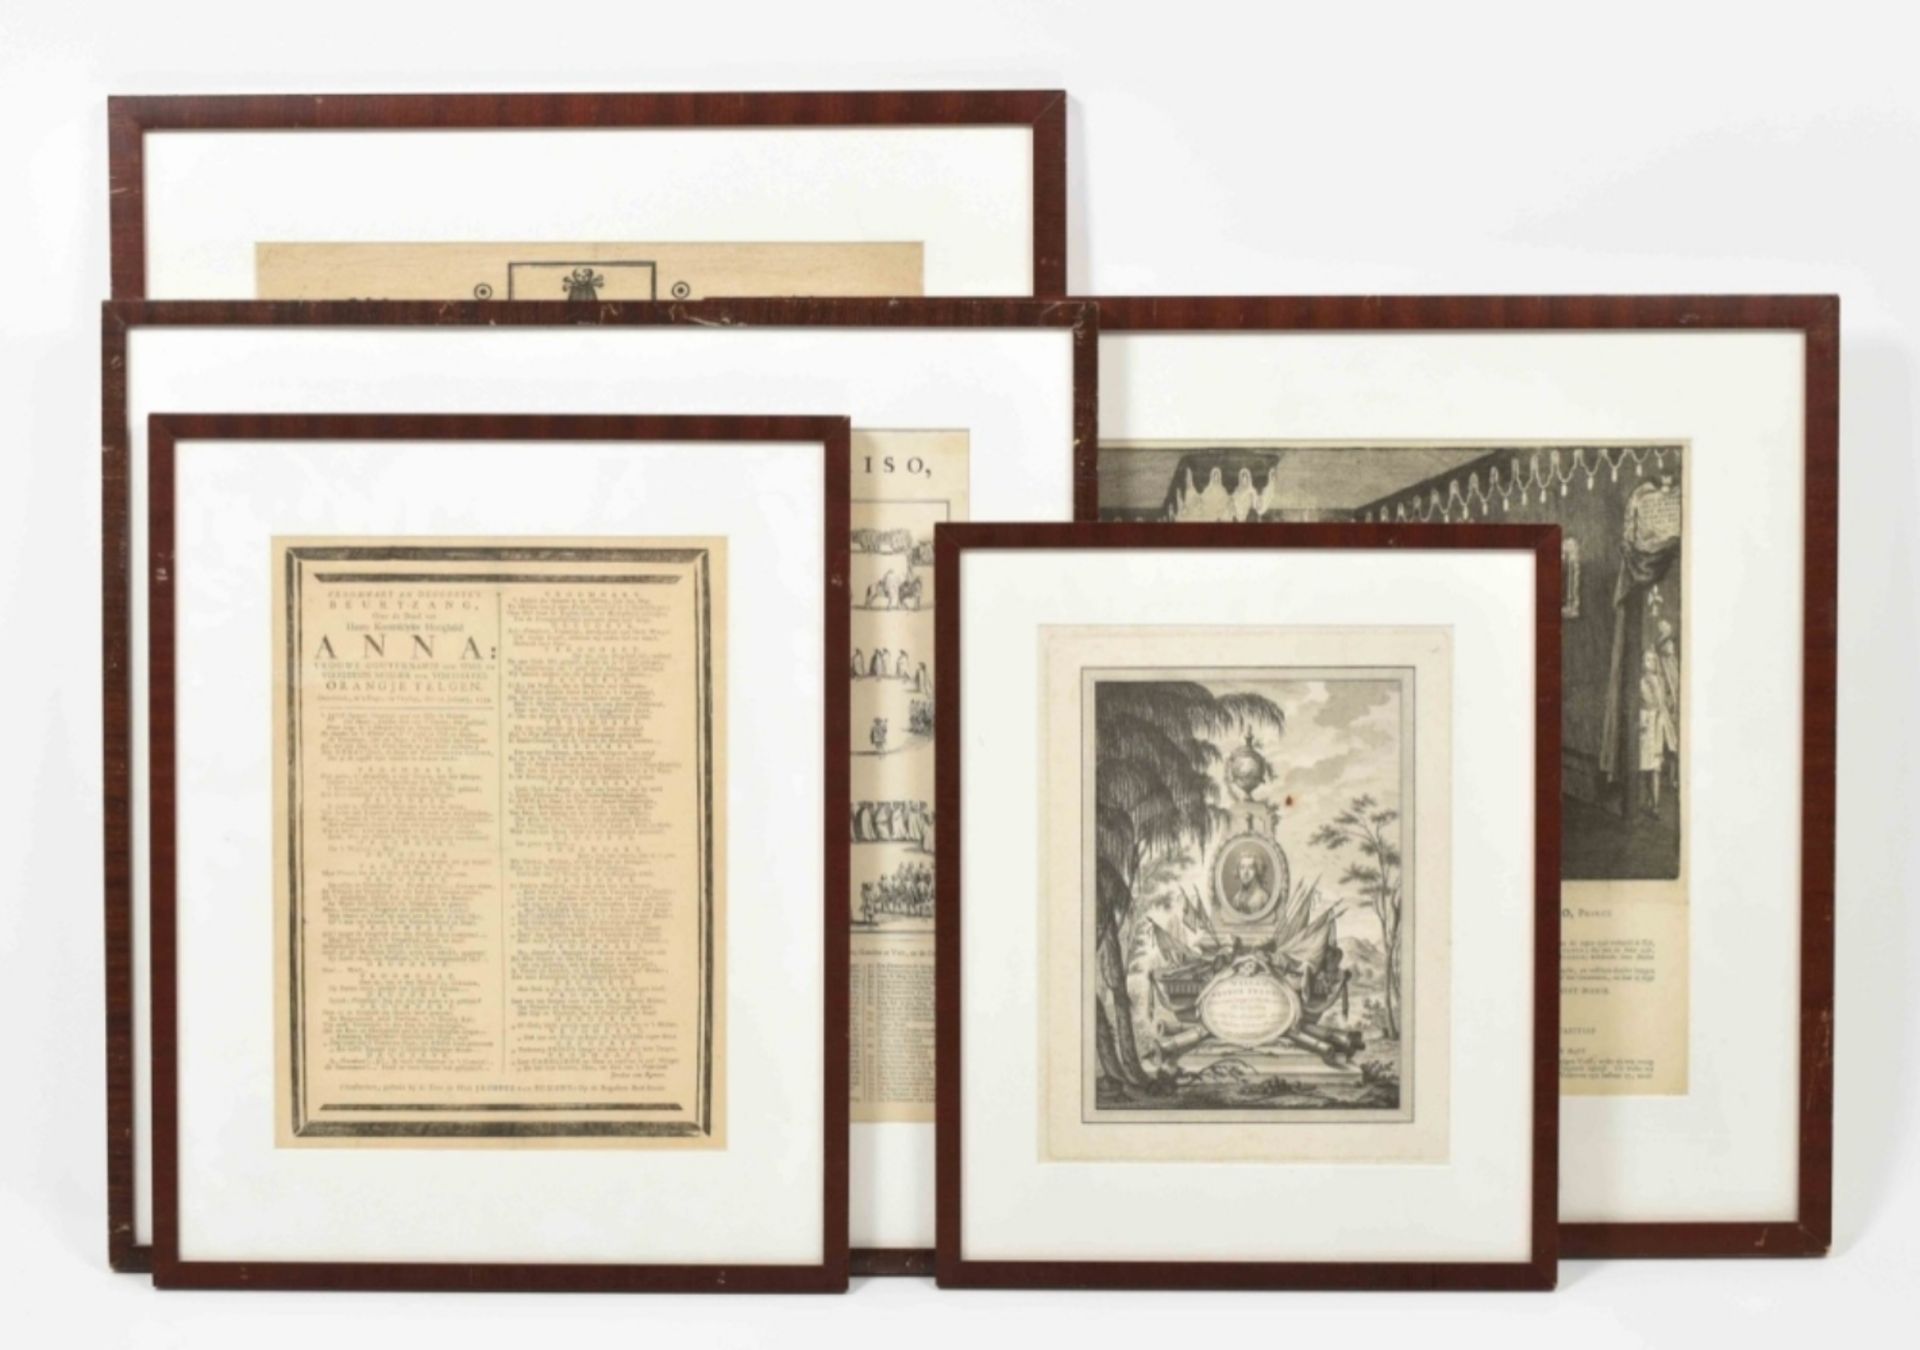 Five framed prints: "Korte beschryving der sieraden